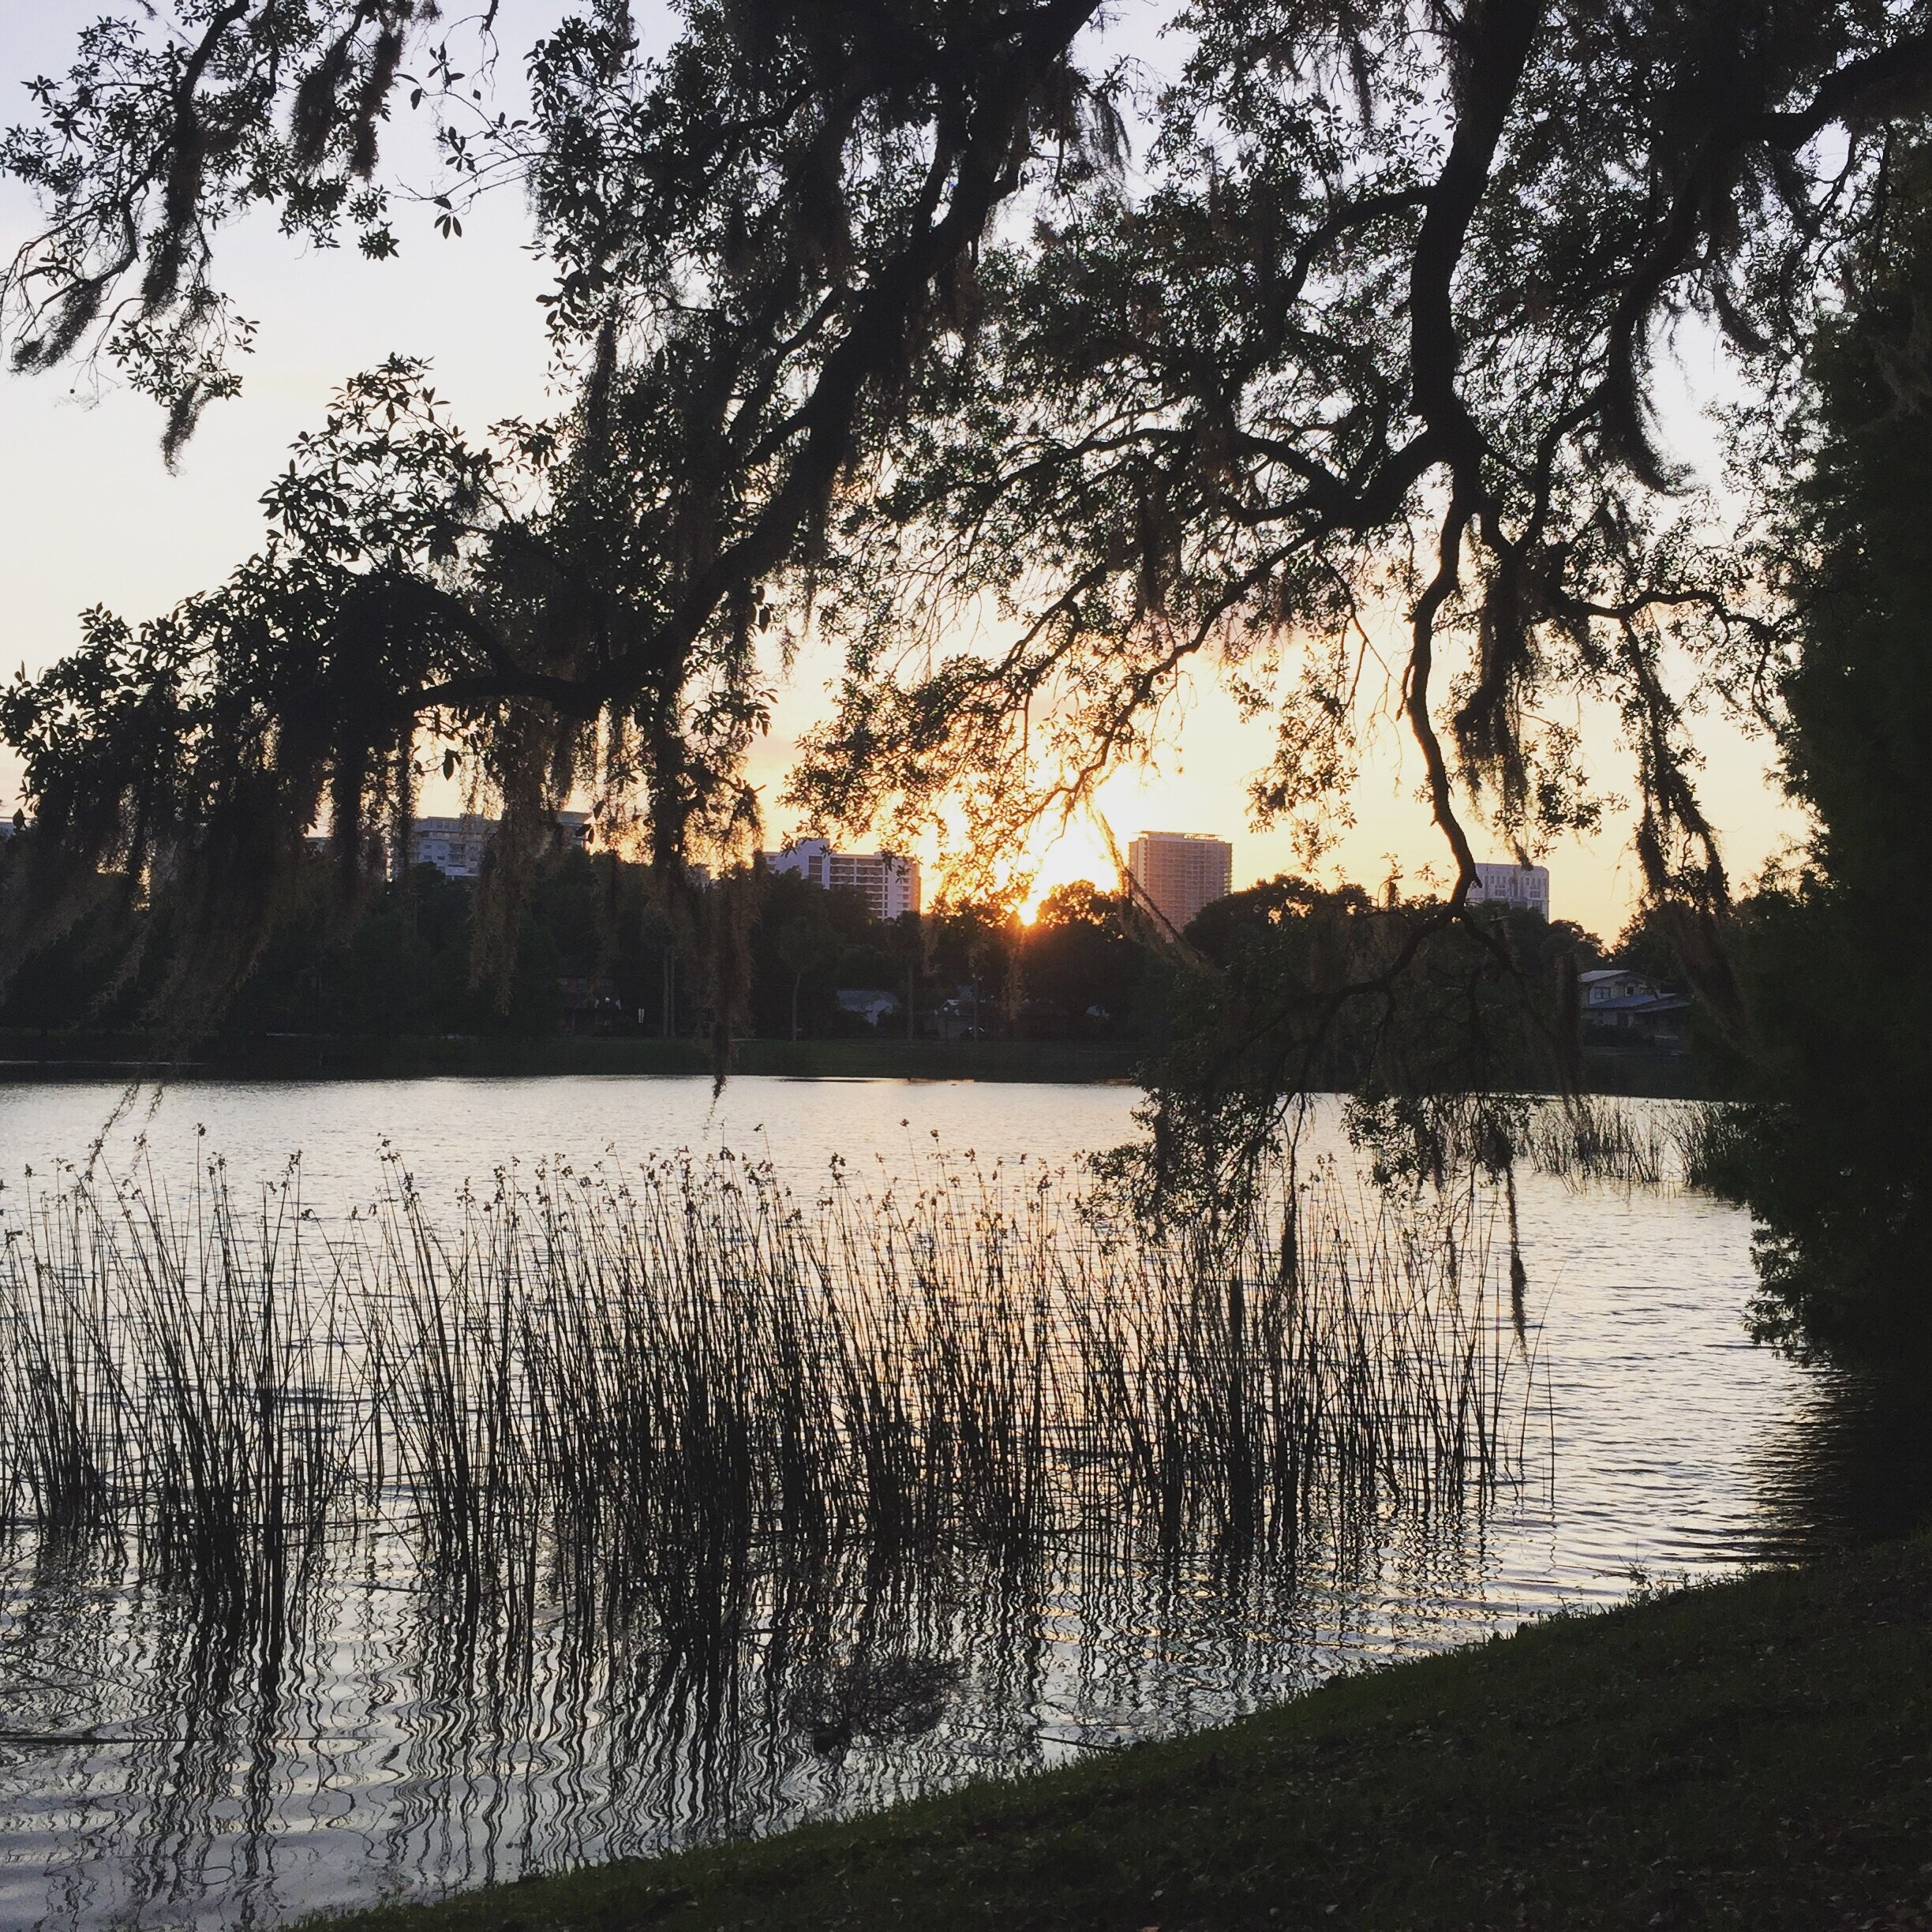 Lawsona - Fern Creek, Orlando, Florida, United States of America